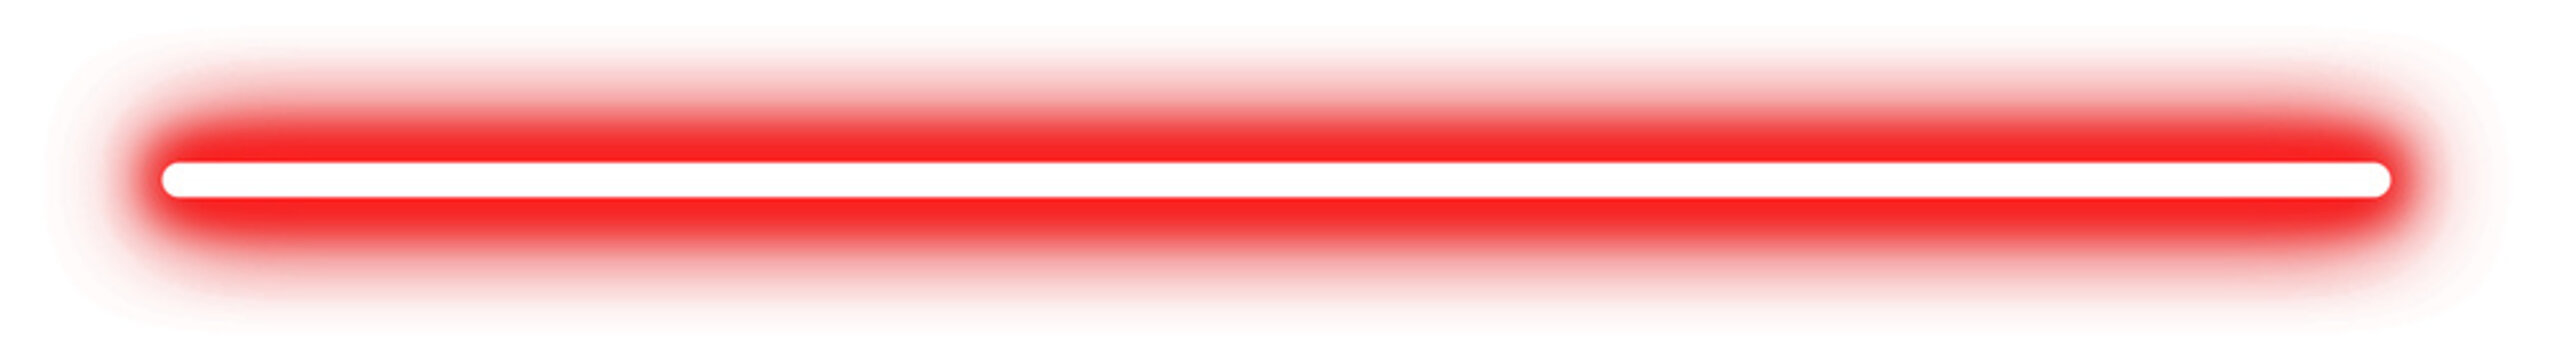 Red Neon Line Border Thin